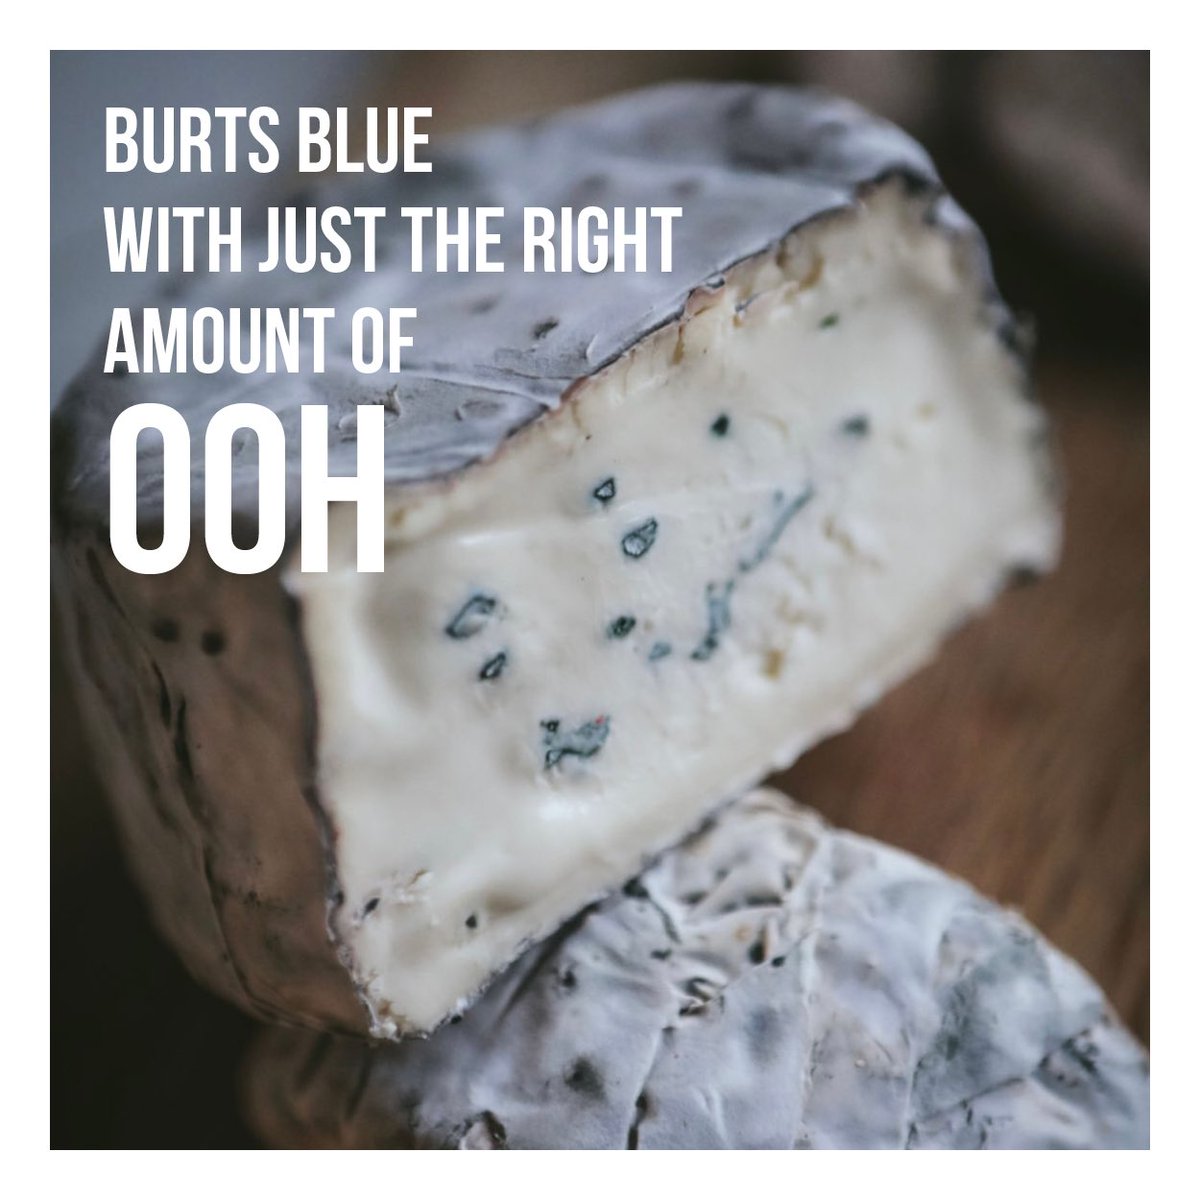 Burts Blue … #cheesemaking #cheese #morethanjustcheese #morecheeseplease #cheeselover #allthecheese #cheeseenthusiast #cheesestagram #artisancheese #cheesemakingworkshop #lovecheese #cheeselovers #fromage #cheesemakers #cheeseclass #learntomakecheese